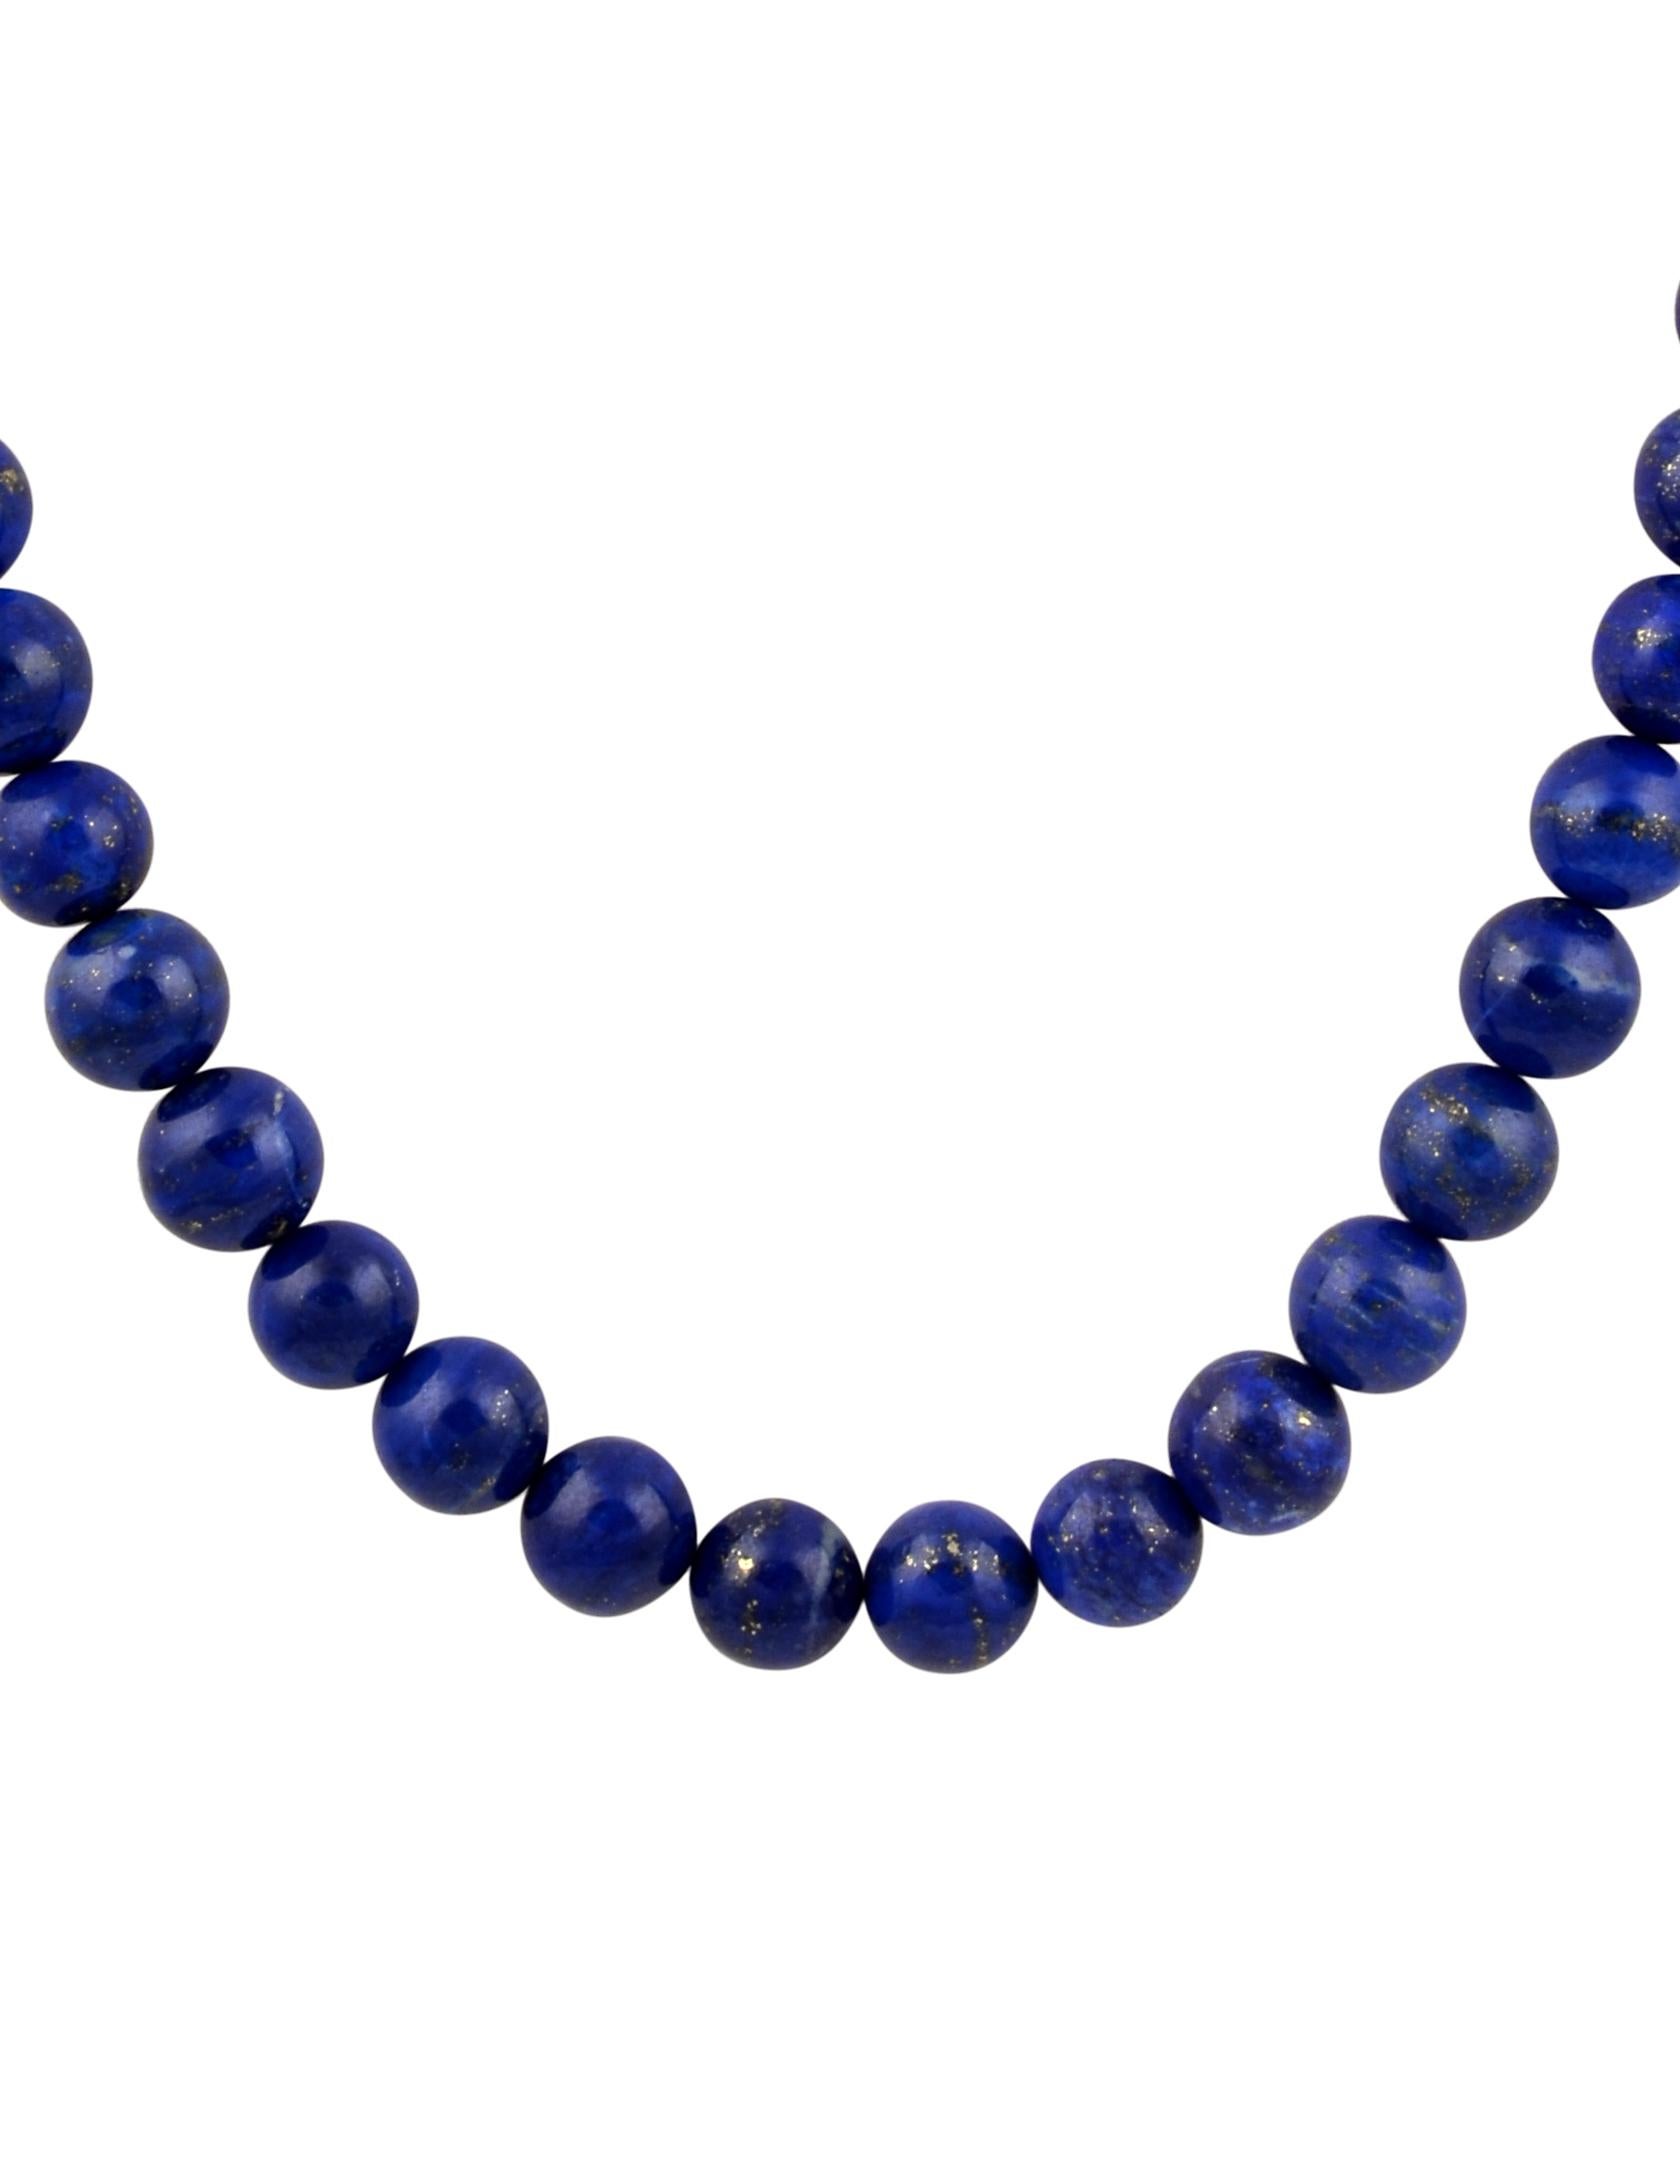 Women's Vintage Lapis Lazuli Single Strand Necklace with 14 Karat Yellow Gold